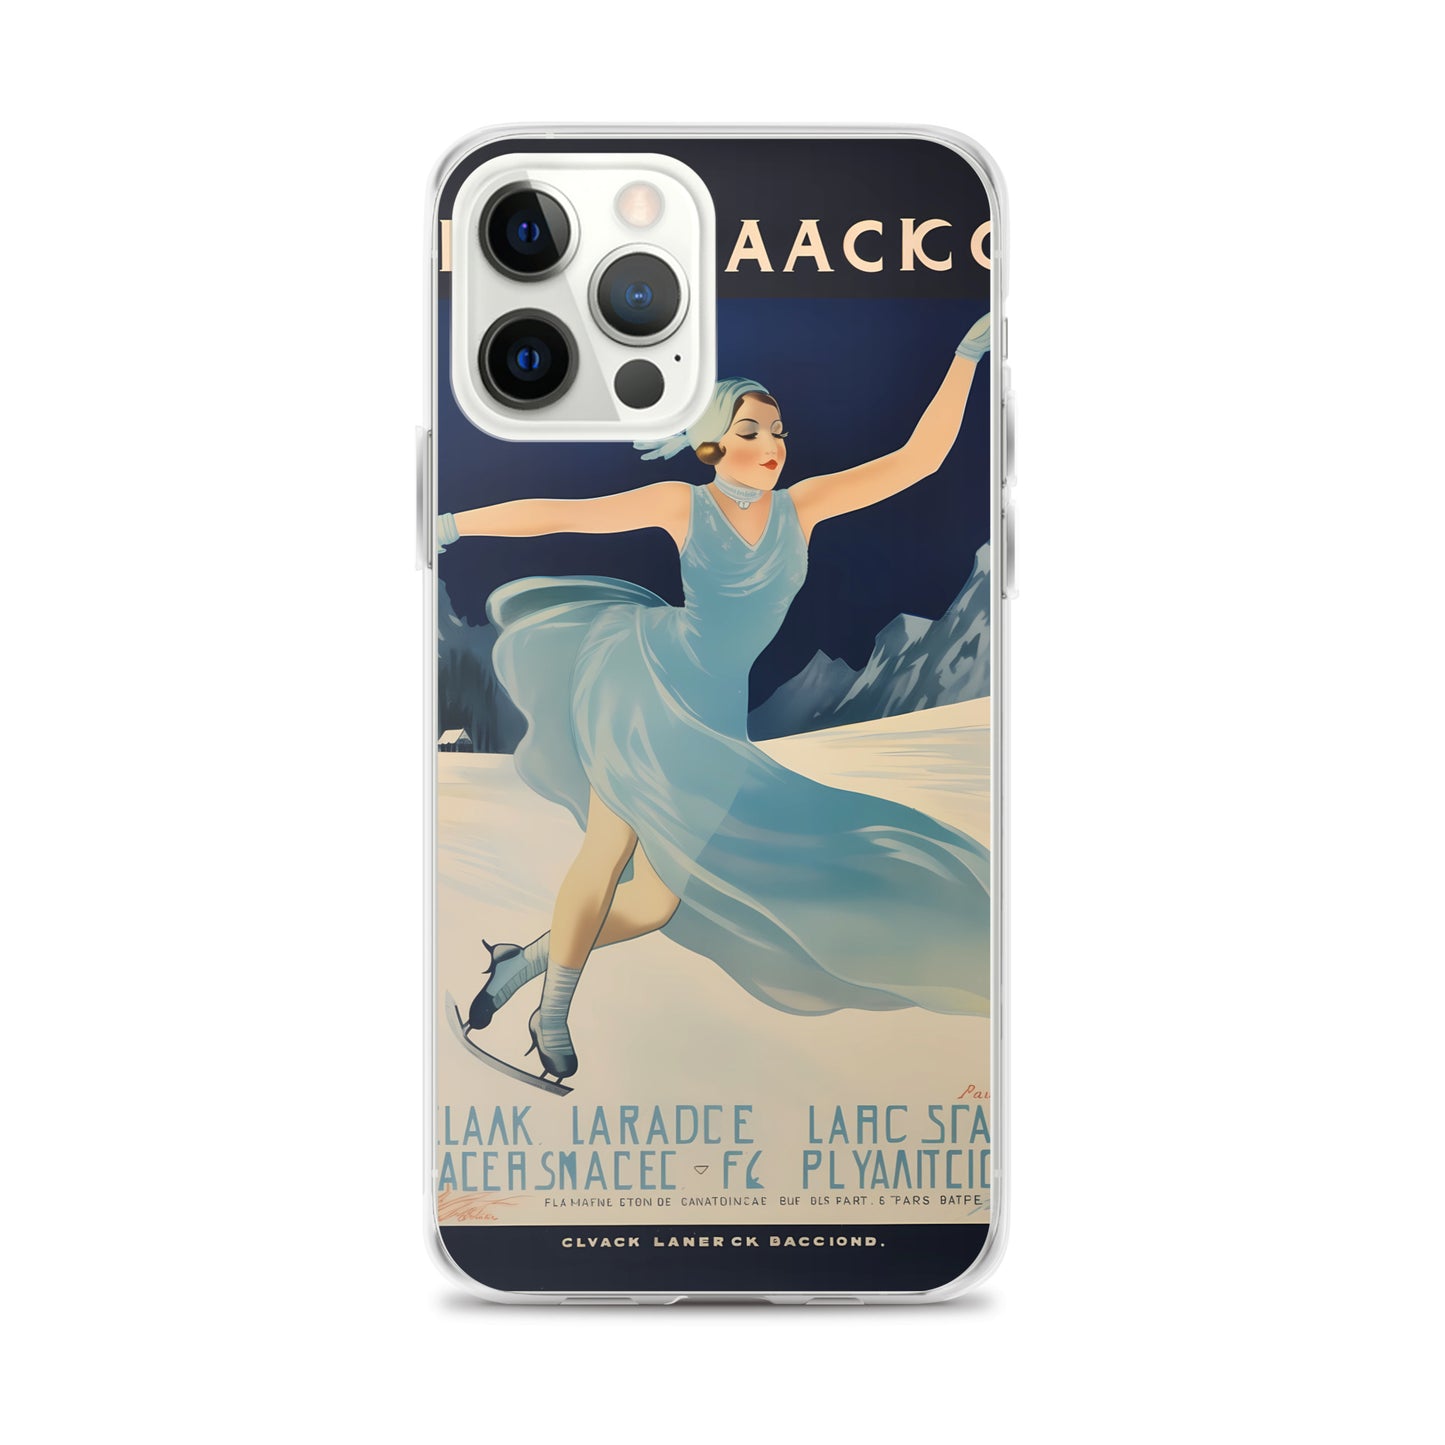 iPhone Case - Vintage Adverts - Lake Placid Skating